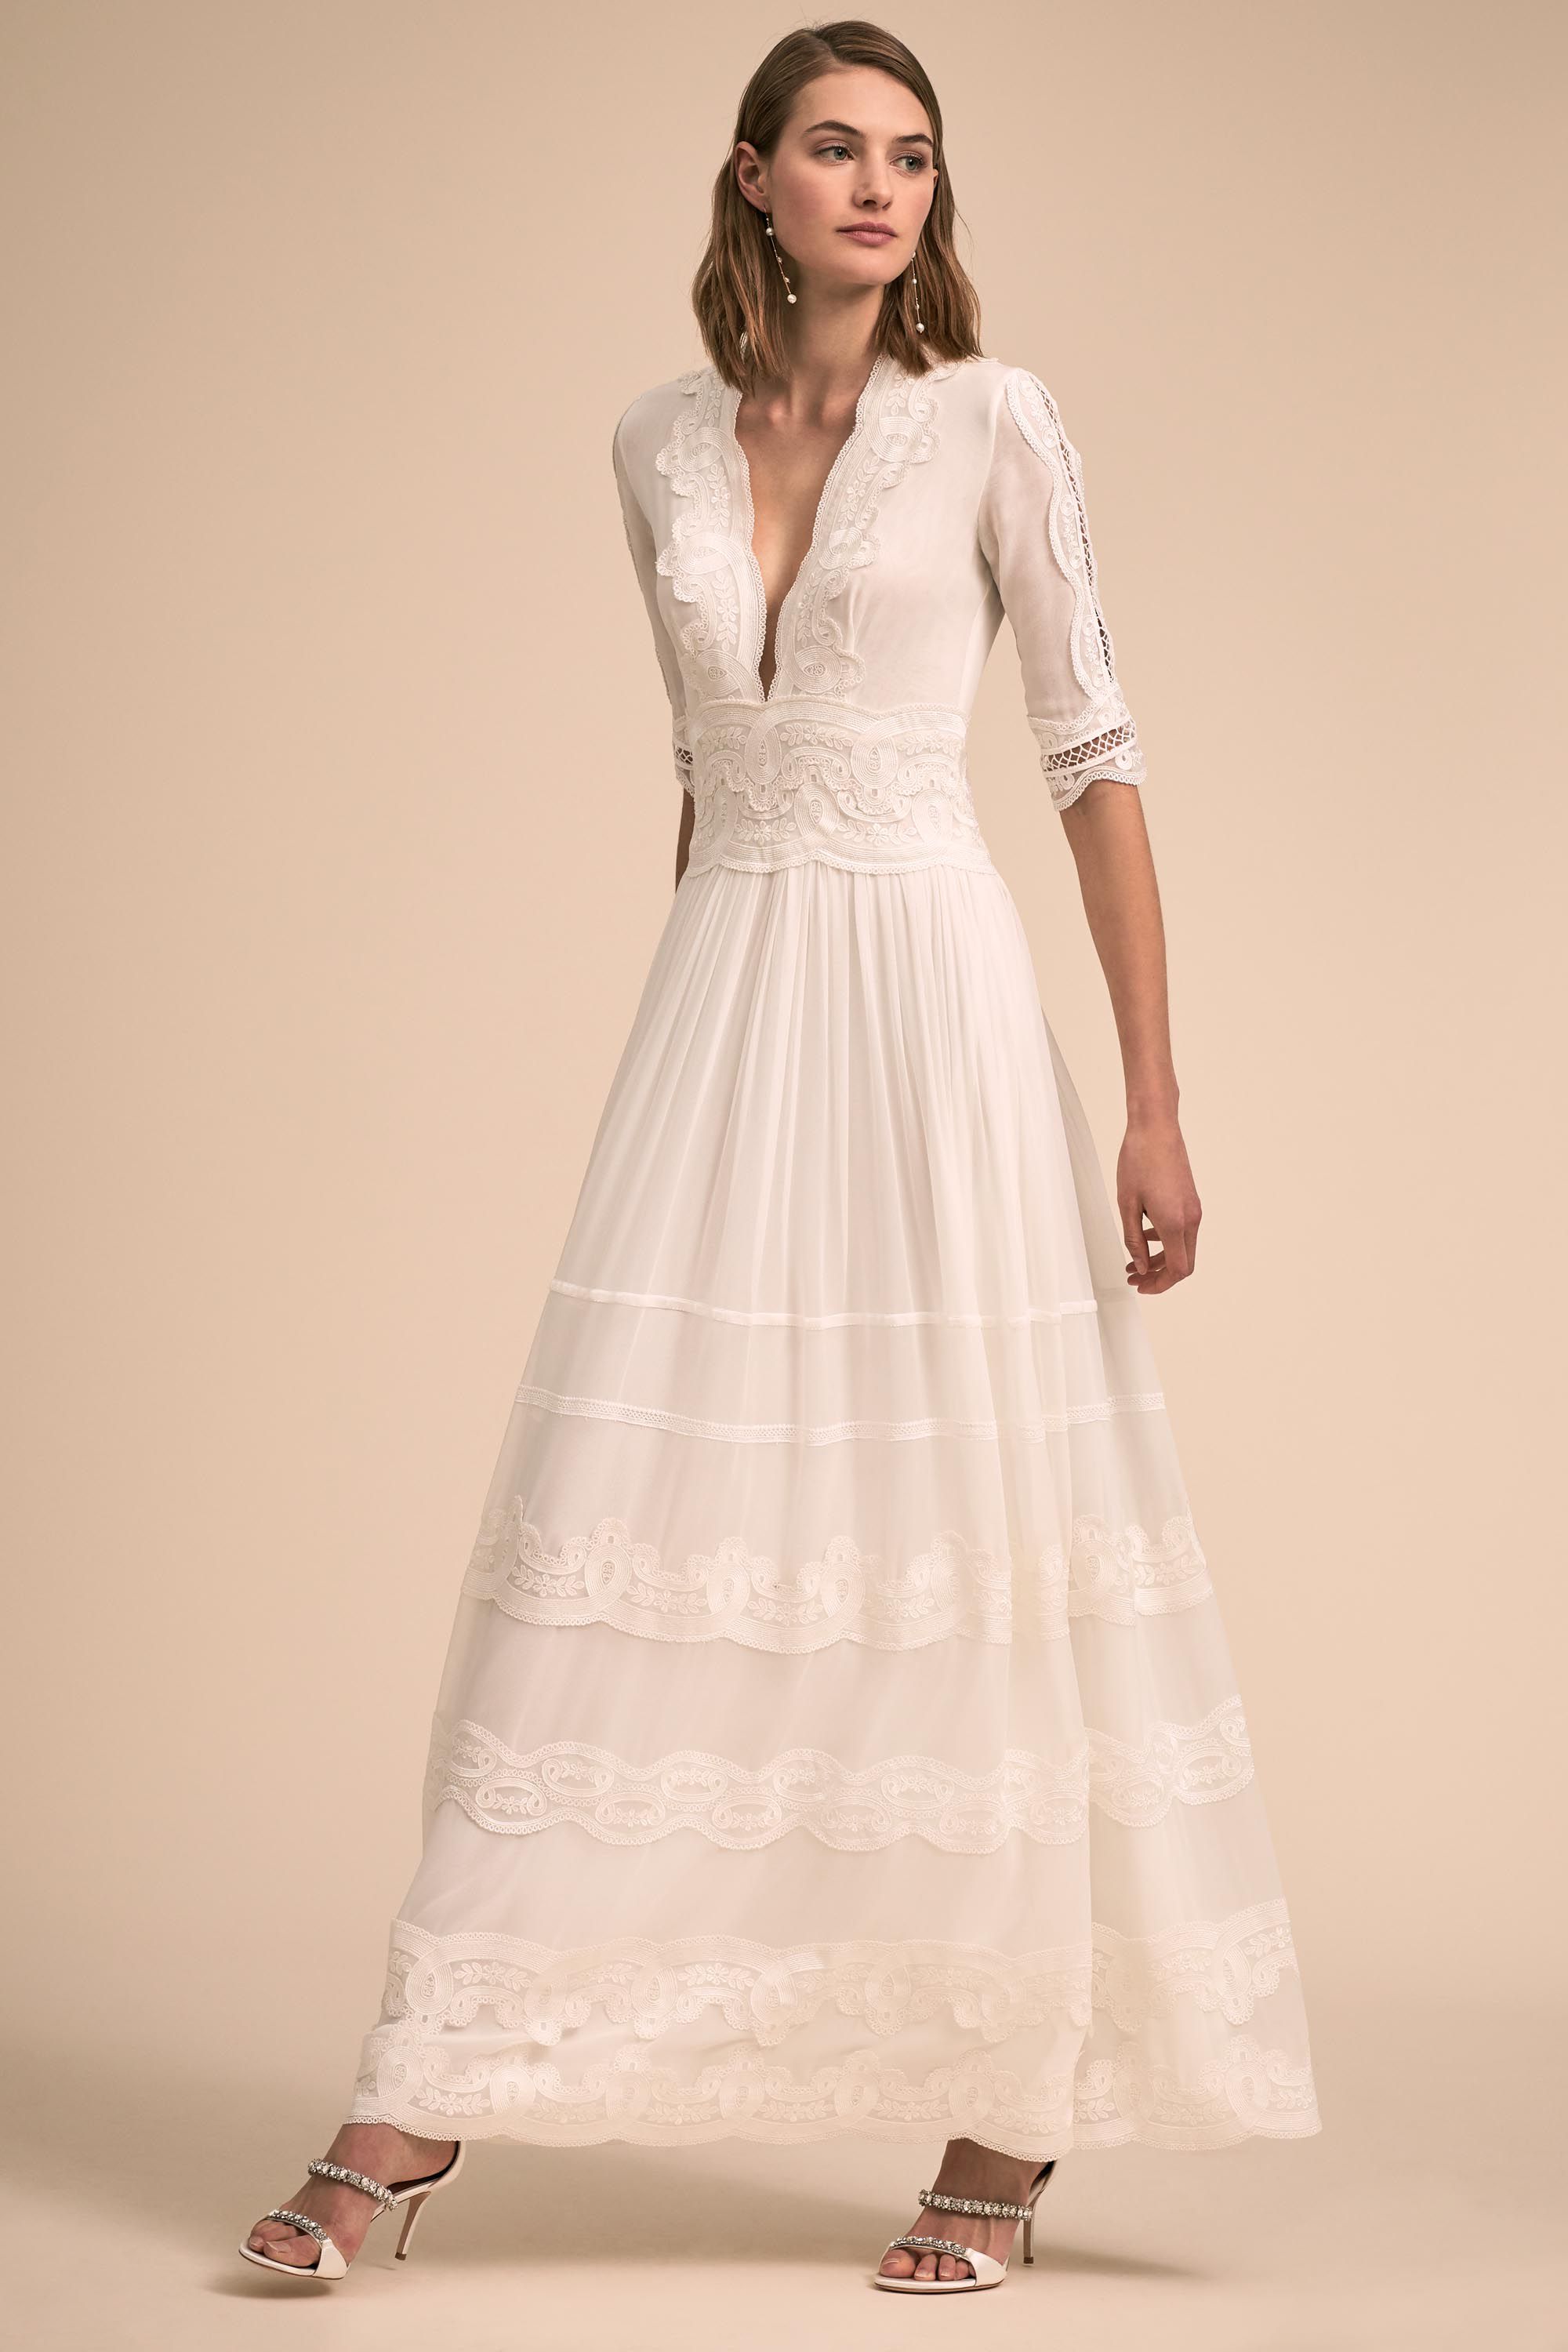 1940s style wedding dress